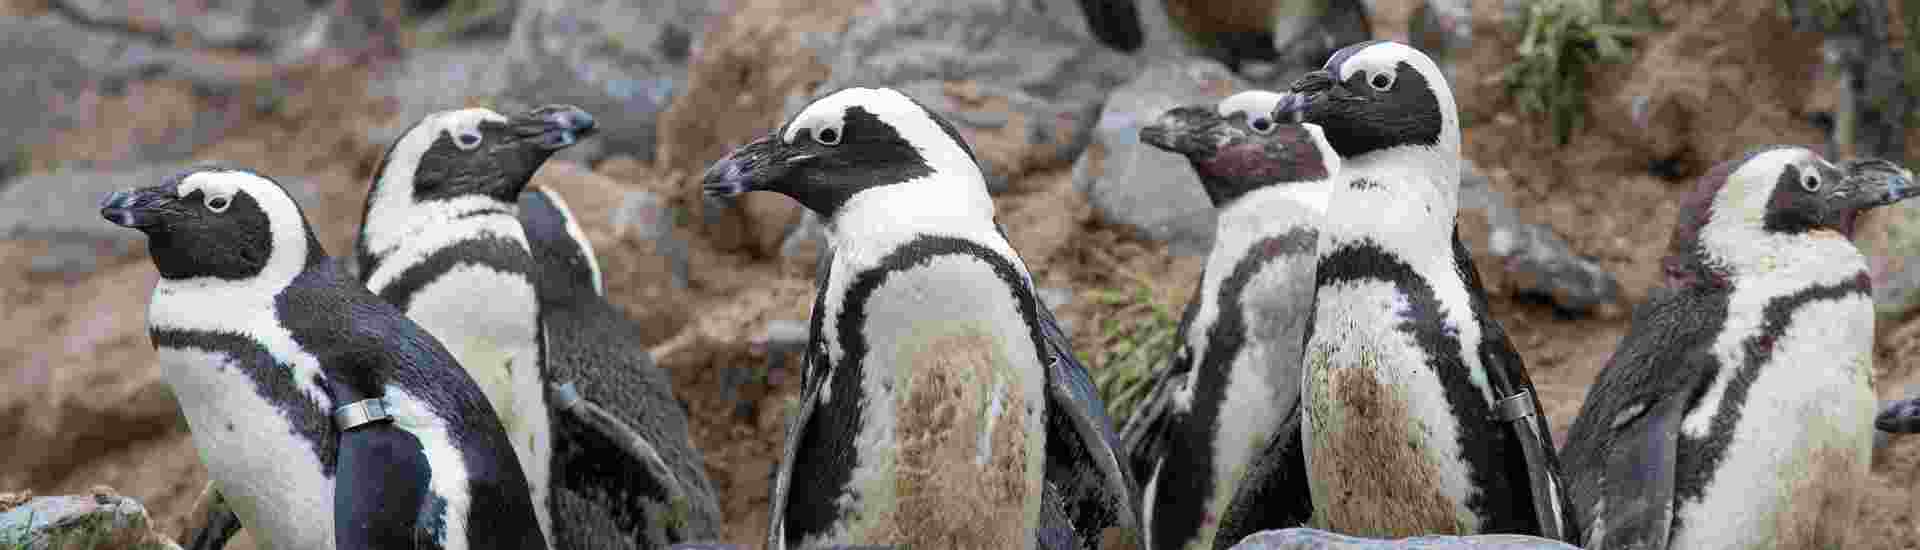 Pinguin-Arrangement